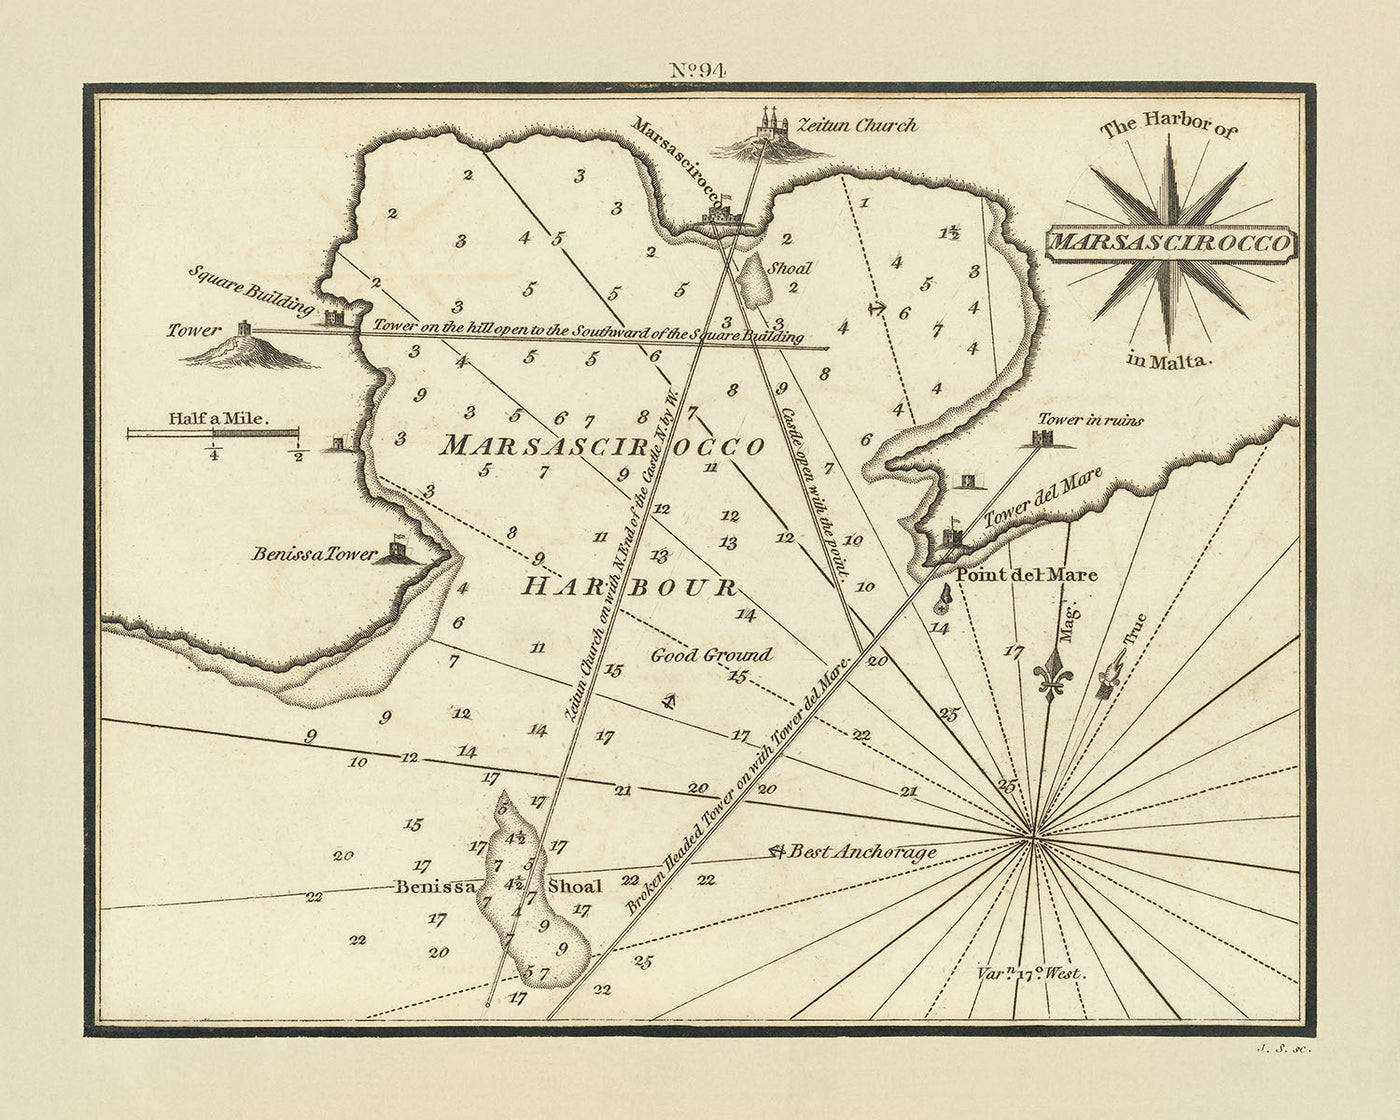 Carte nautique du vieux port de Marsaxlokk par Heather, 1802 : baie de Marsaxlokk, tour Benisa, église Zeitun